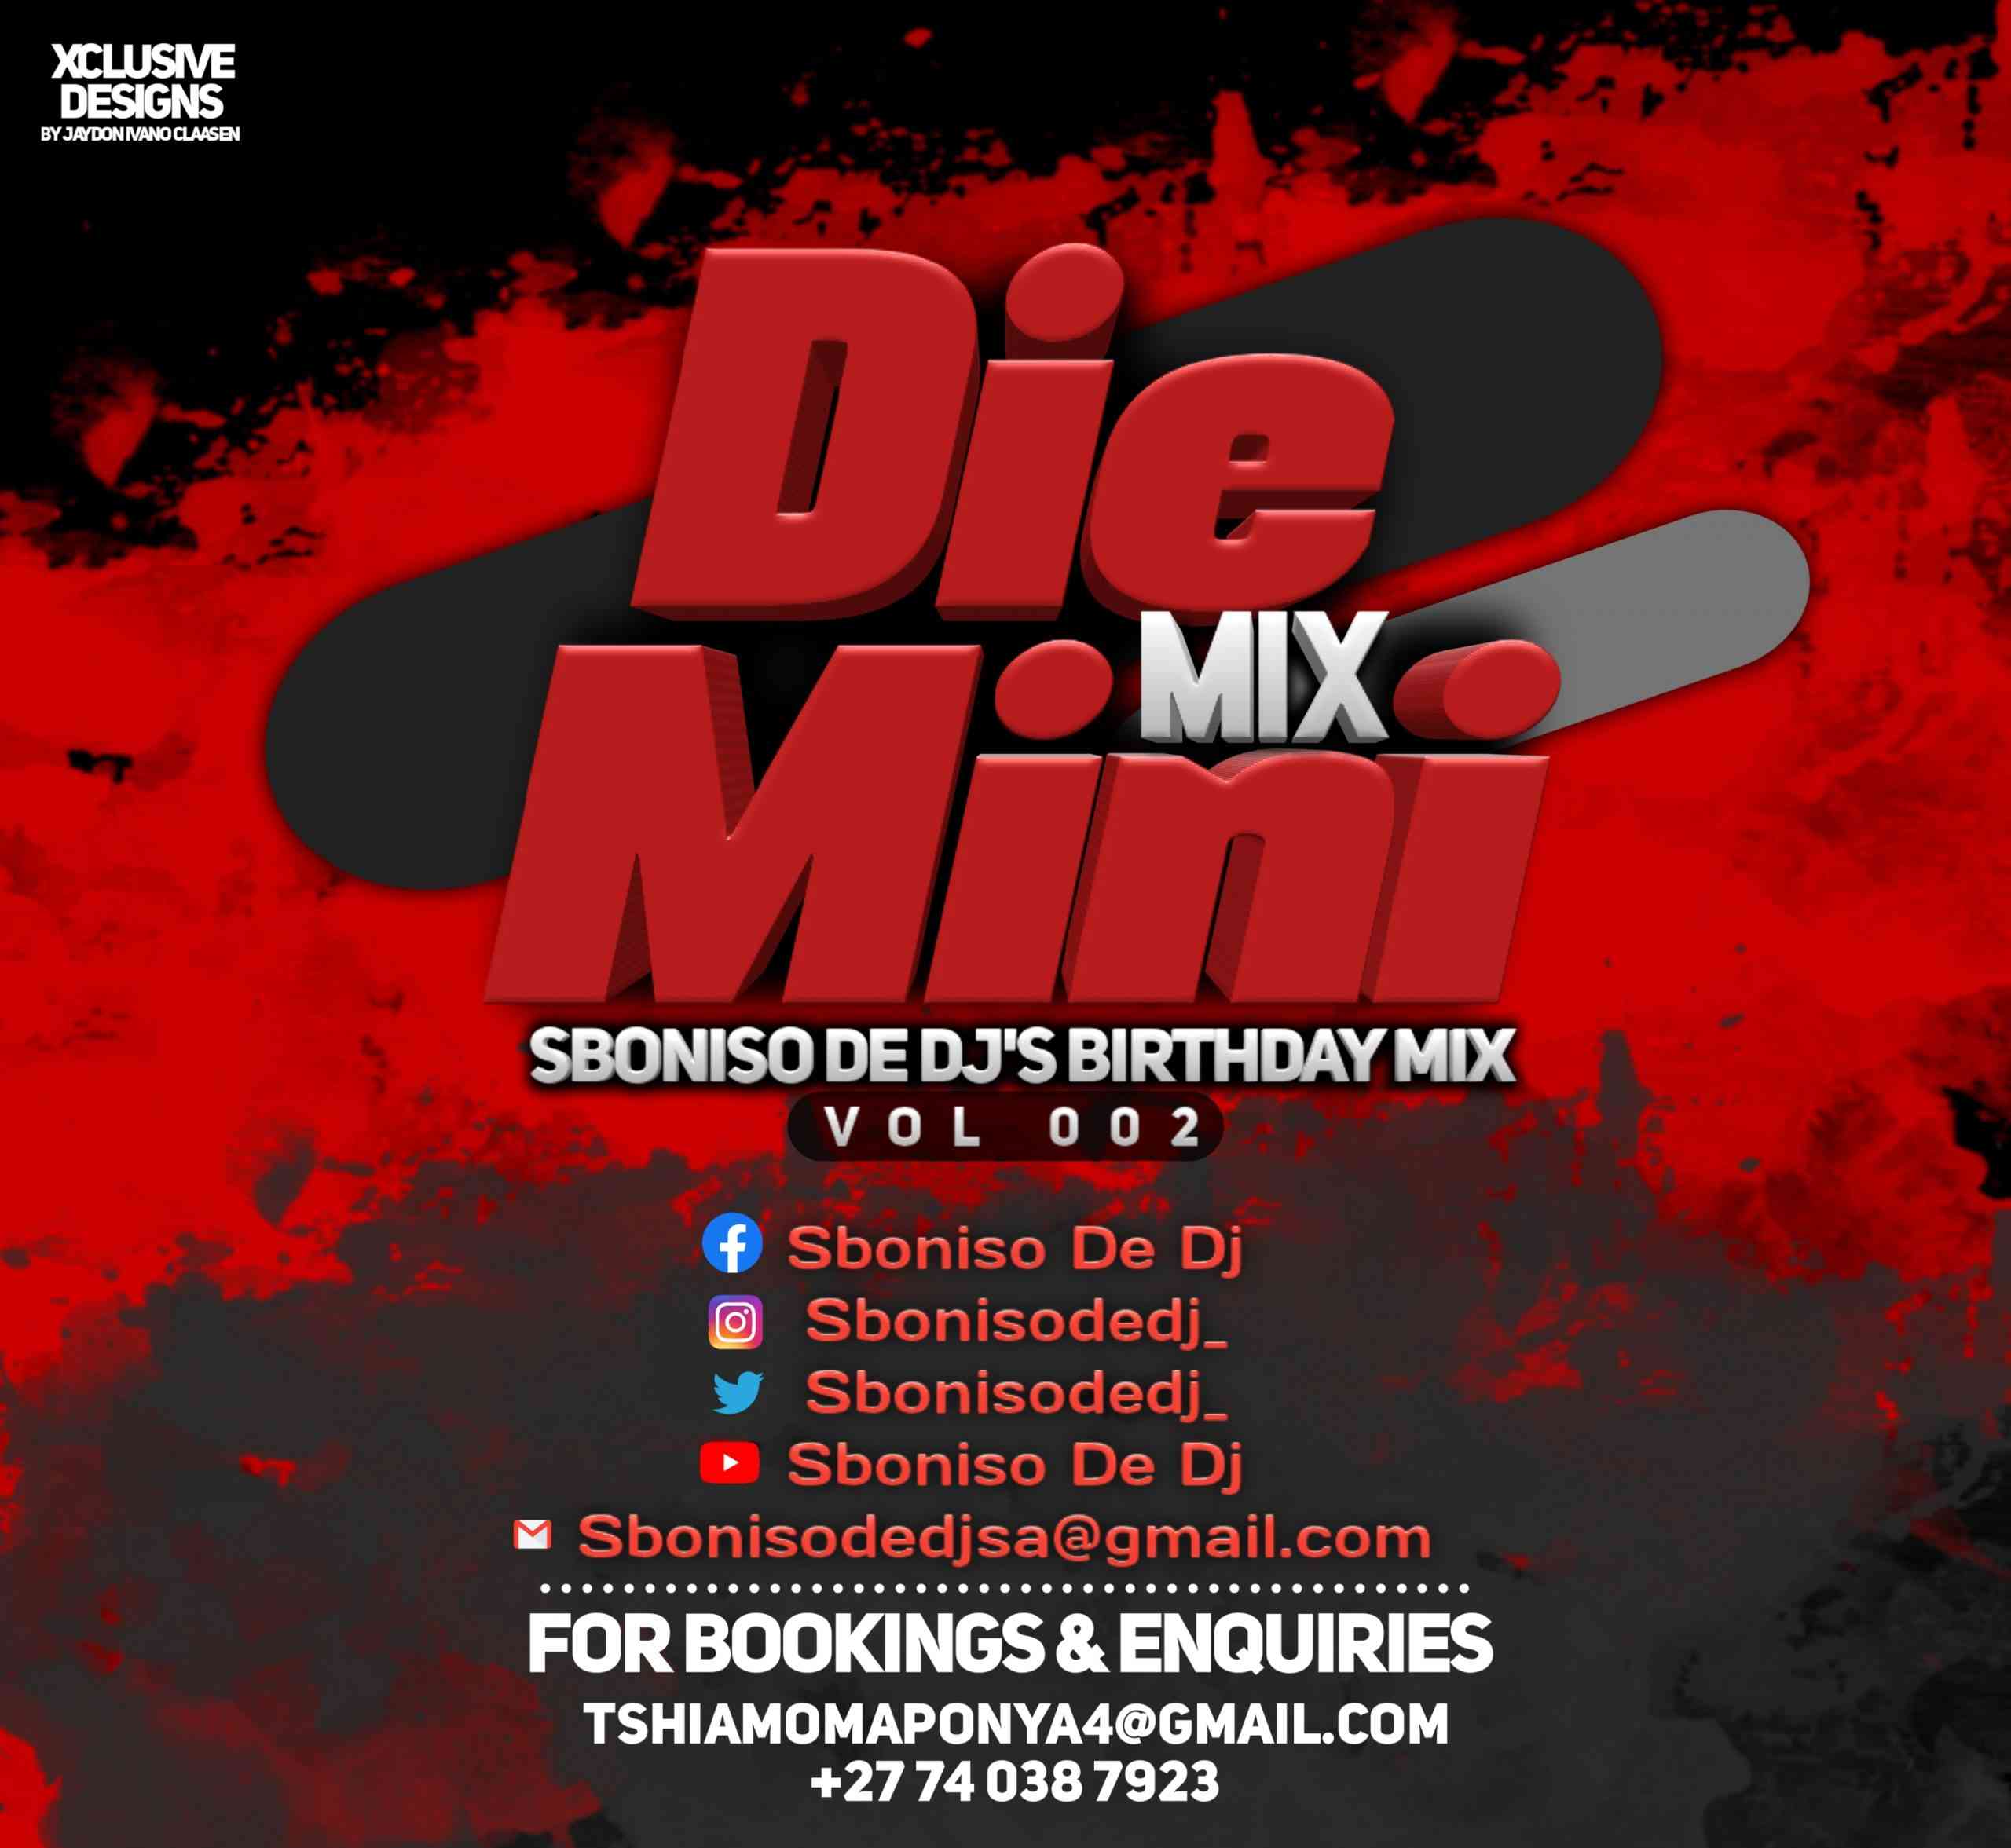 Sboniso De DJ - Die Mini Mix 002 (Birthday Mix)